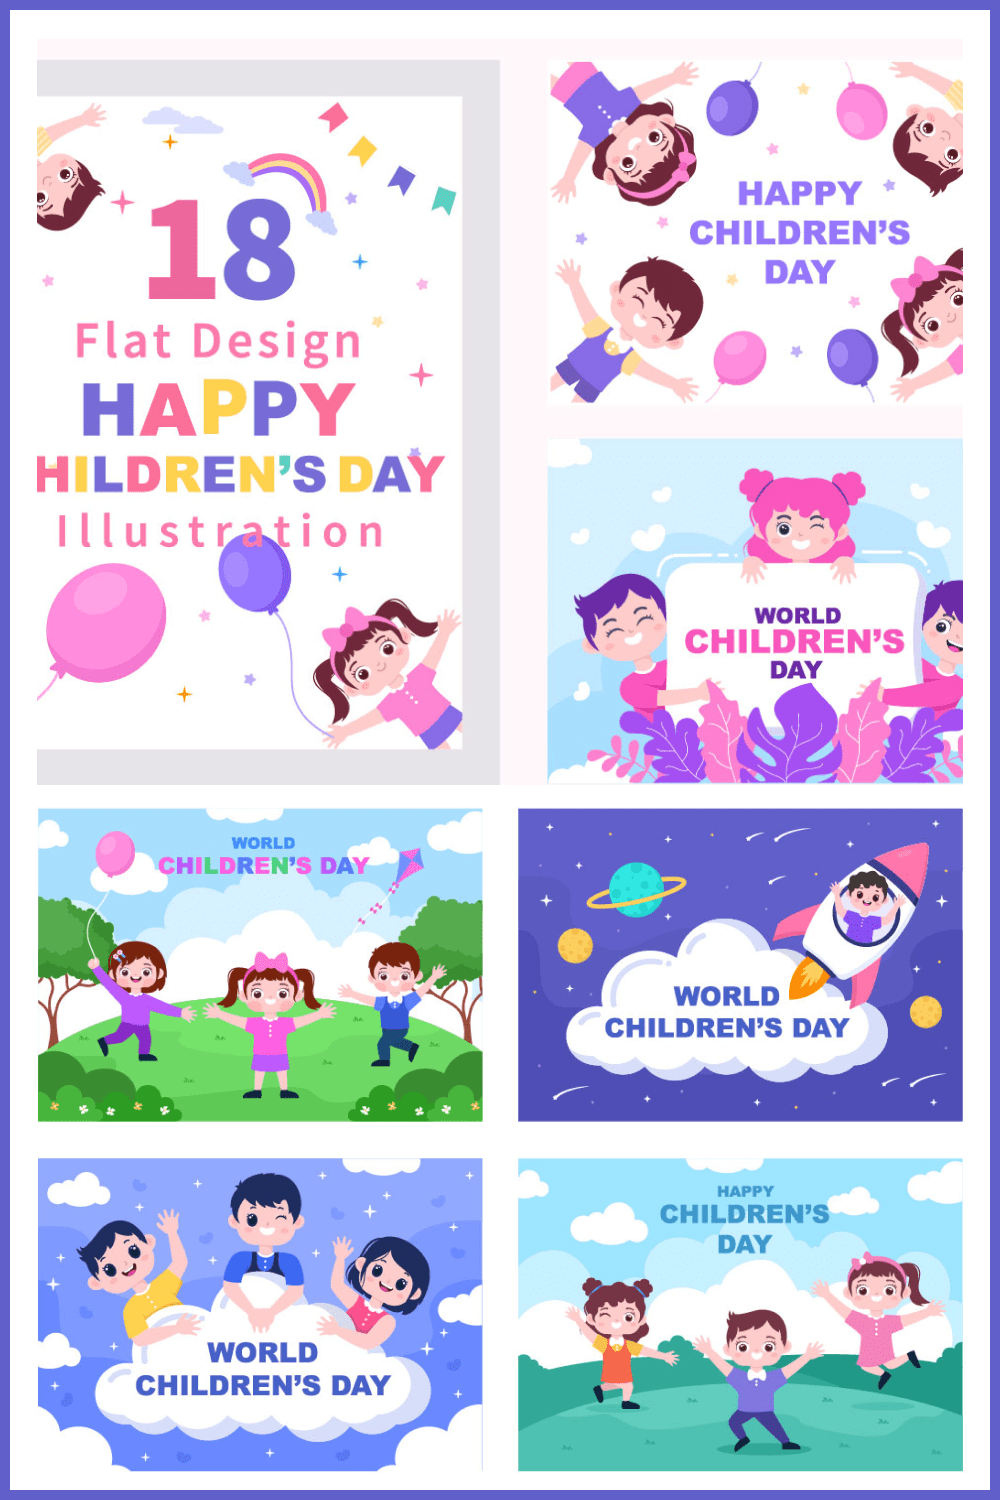 18 Happy Children’s Day Illustration - MasterBundles - Pinterest Collage Image.